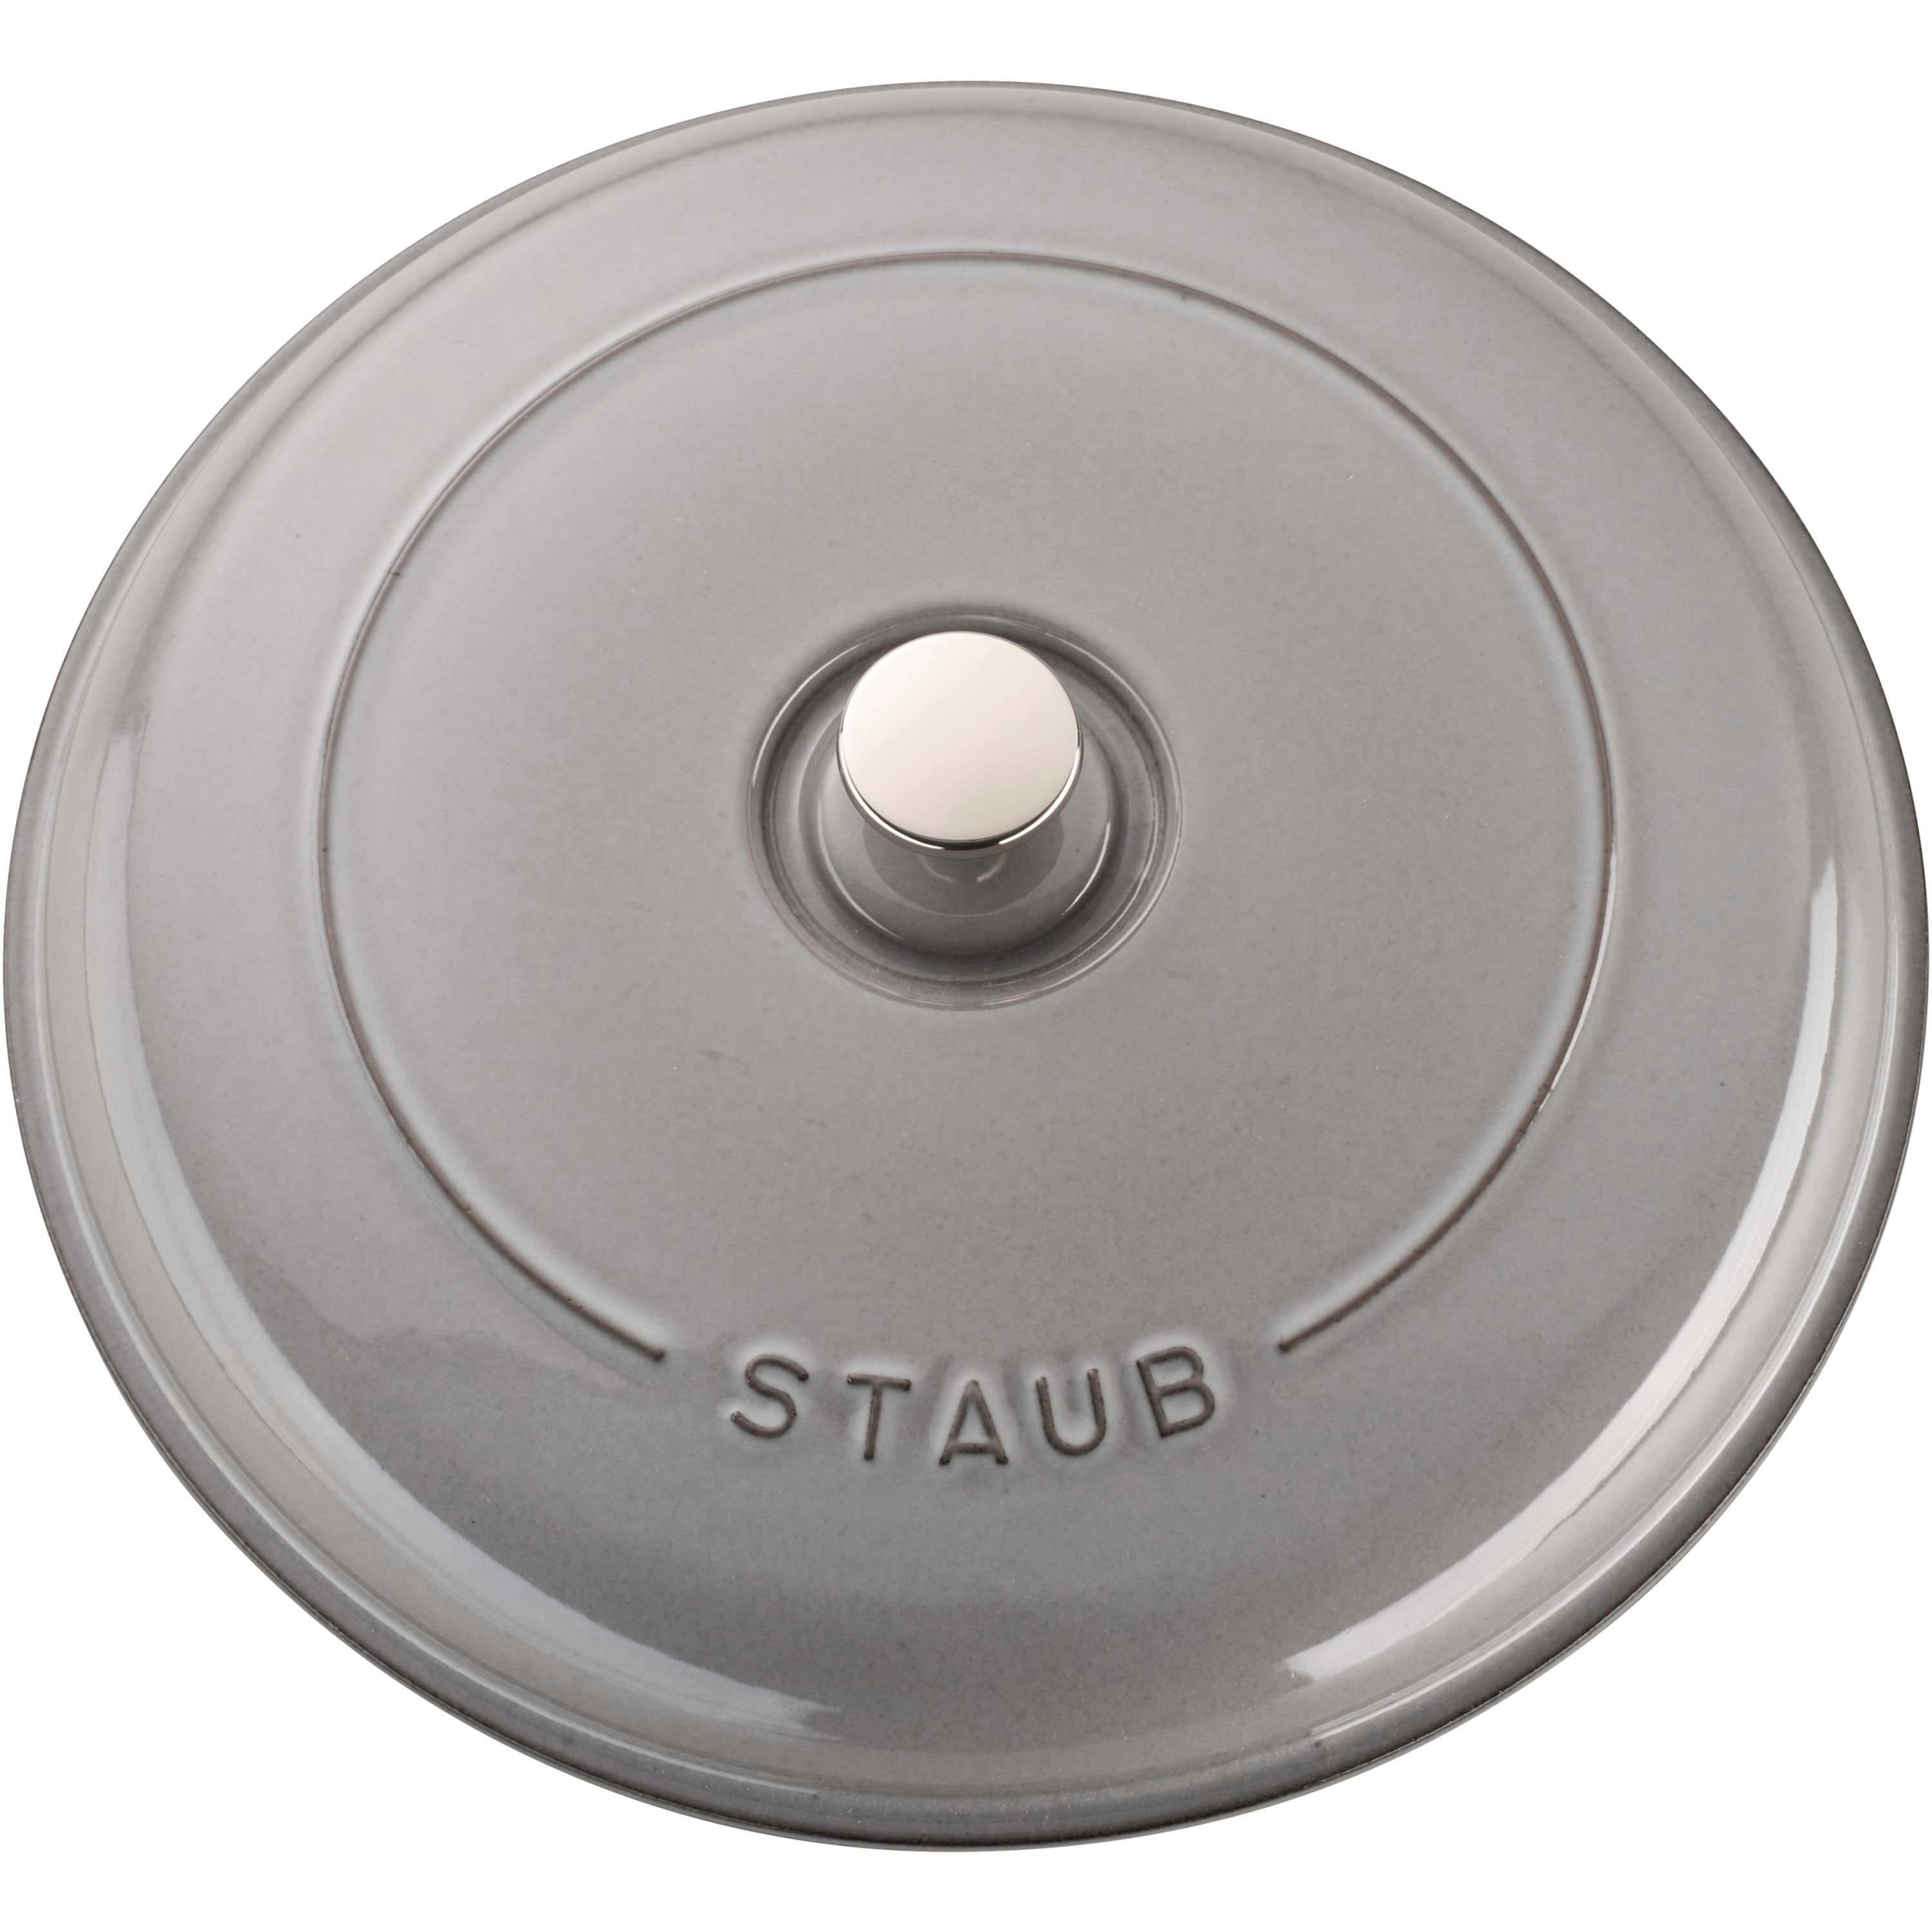 Staub - Cast Iron 3.5-qt Braiser with Glass Lid - Graphite Grey